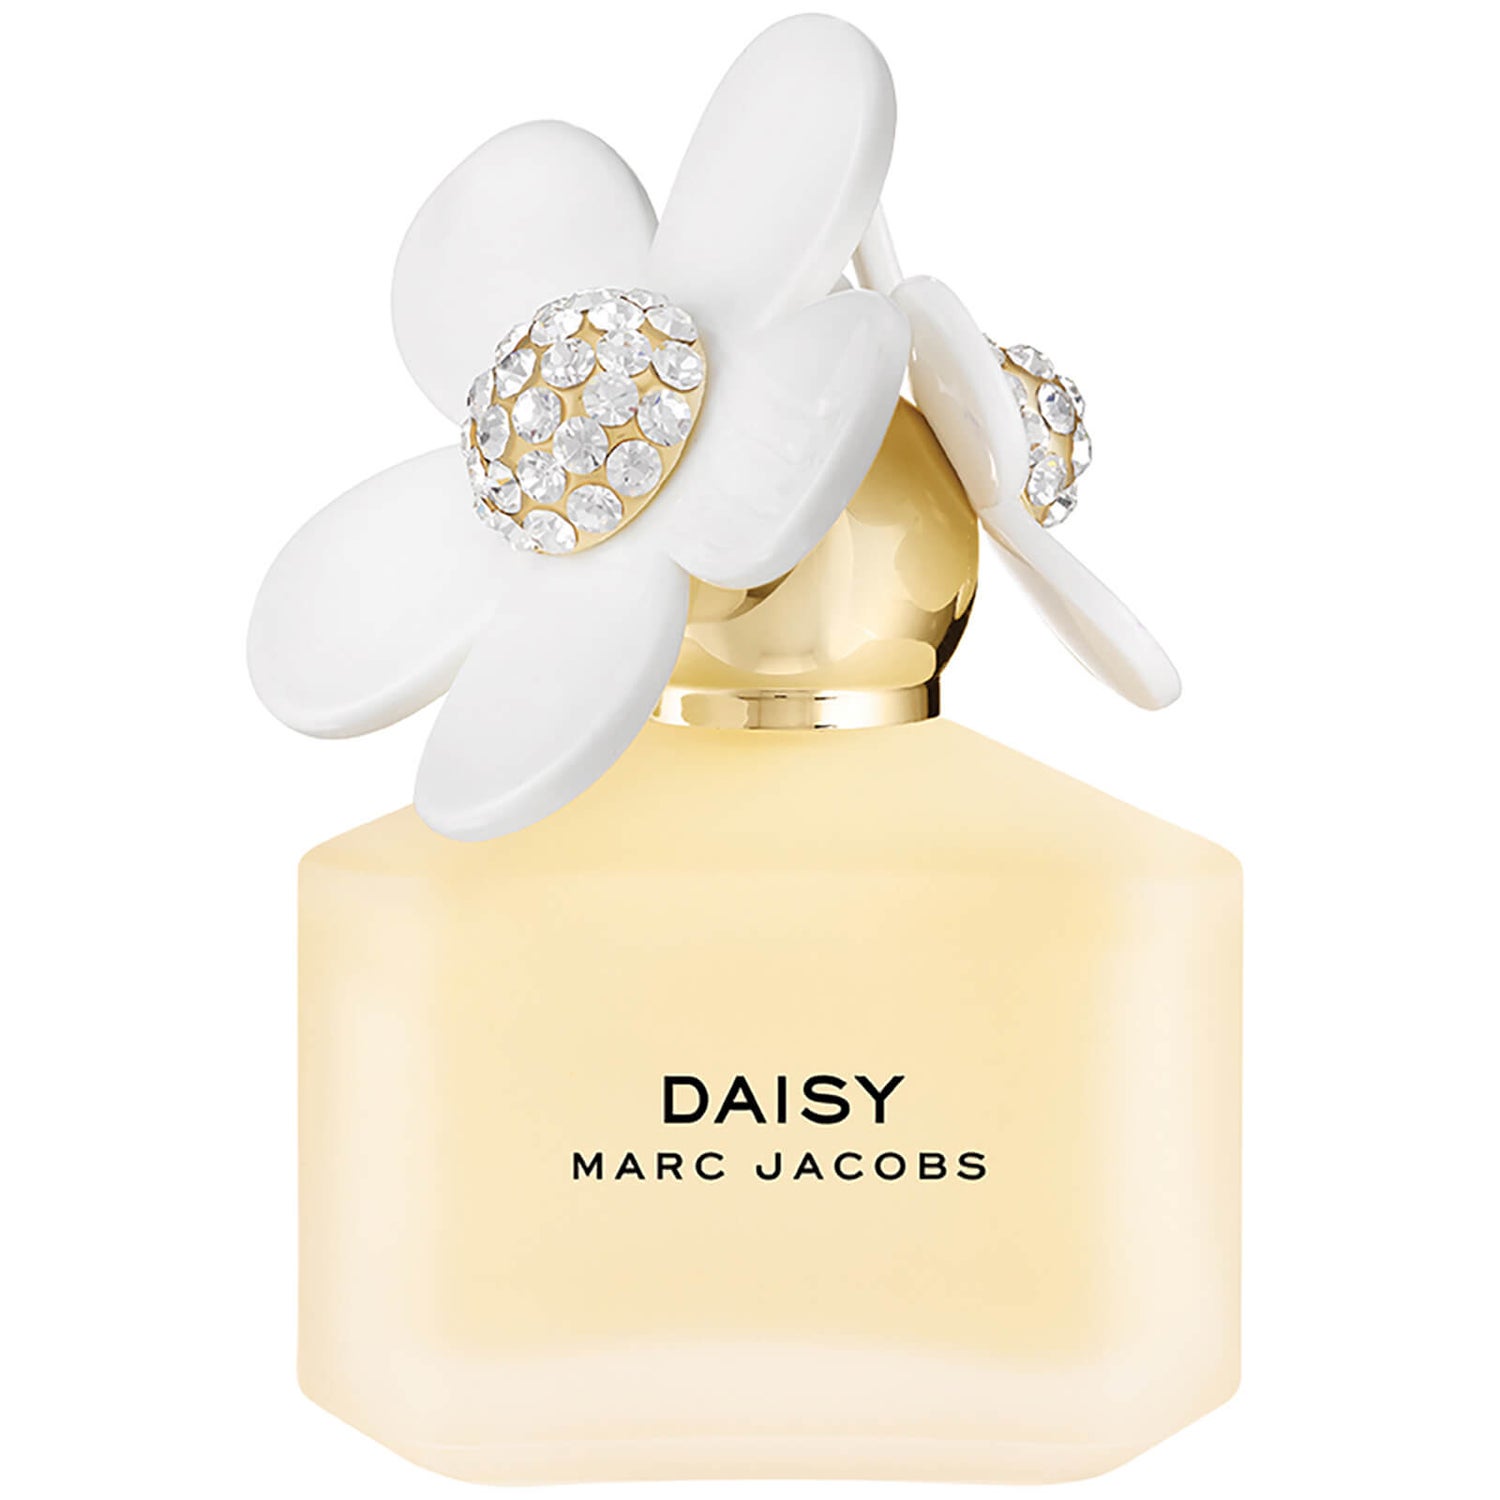 Marc Jacobs Daisy Eau de Toilette 50ml - 10 Year Anniversary Limited ...